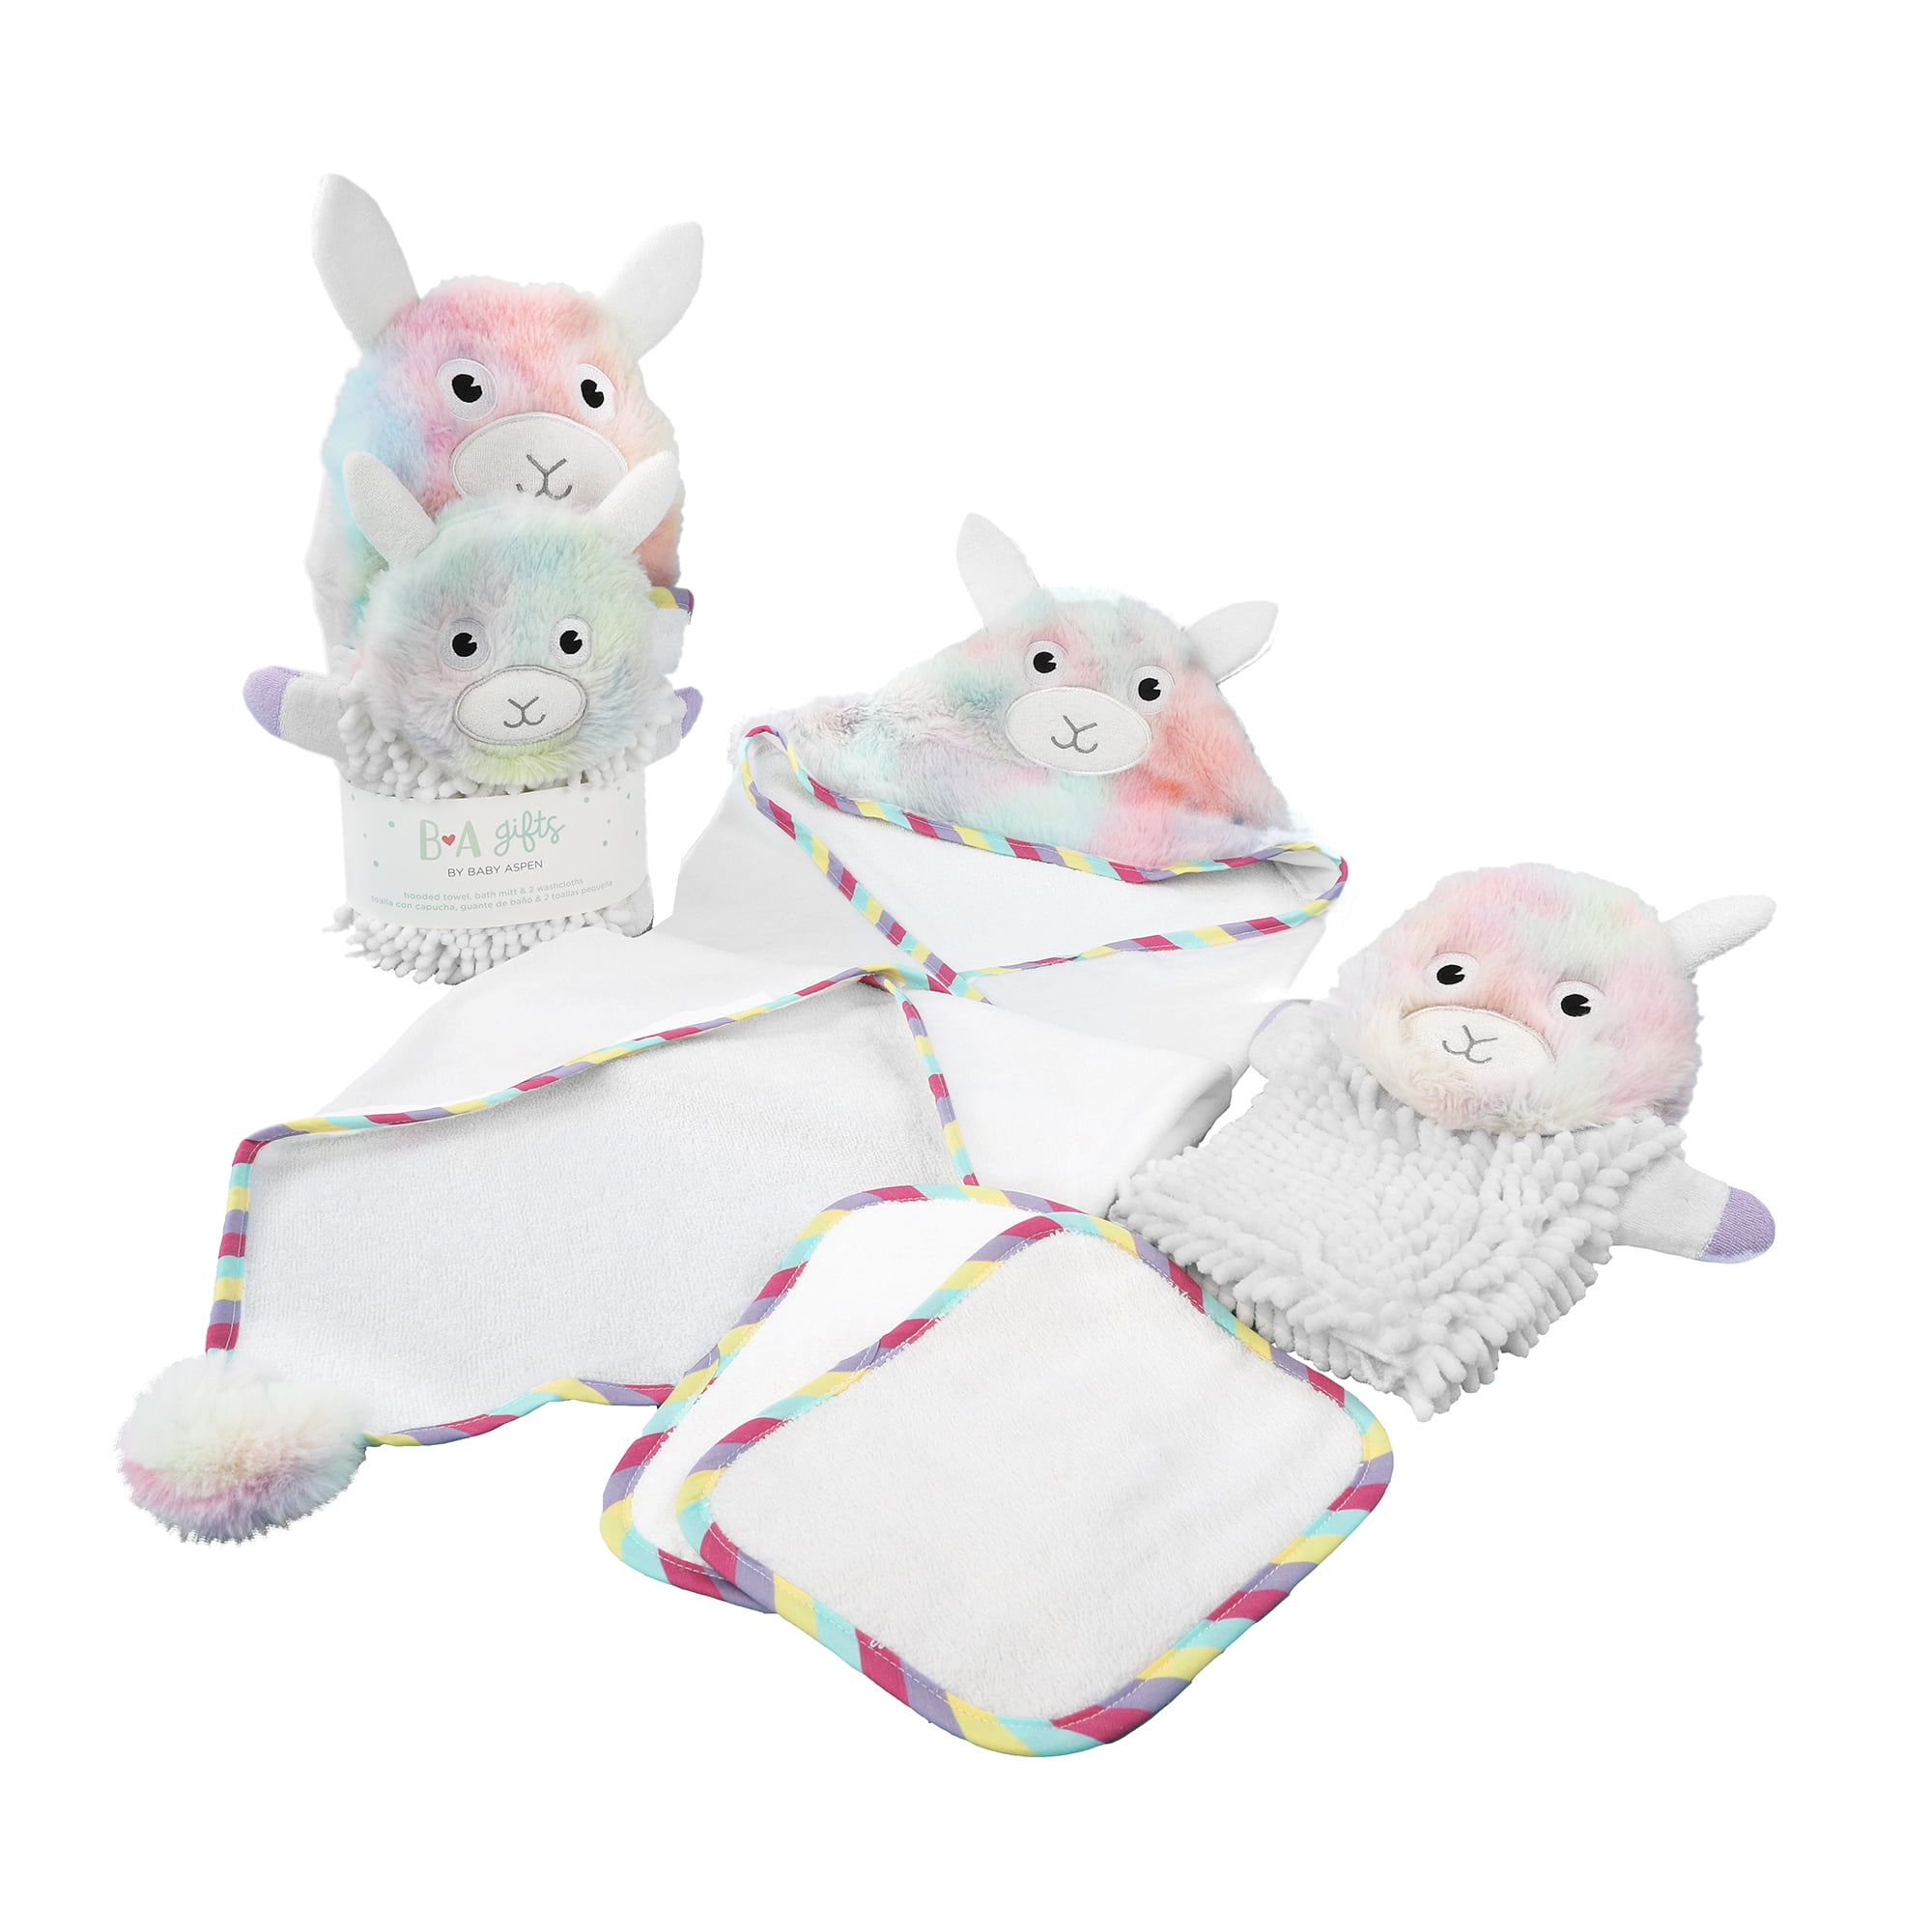 Silver One Kids Plush Donkey & Blanket 2 pc Gift Set with 40"x 50" Throw Blanket 